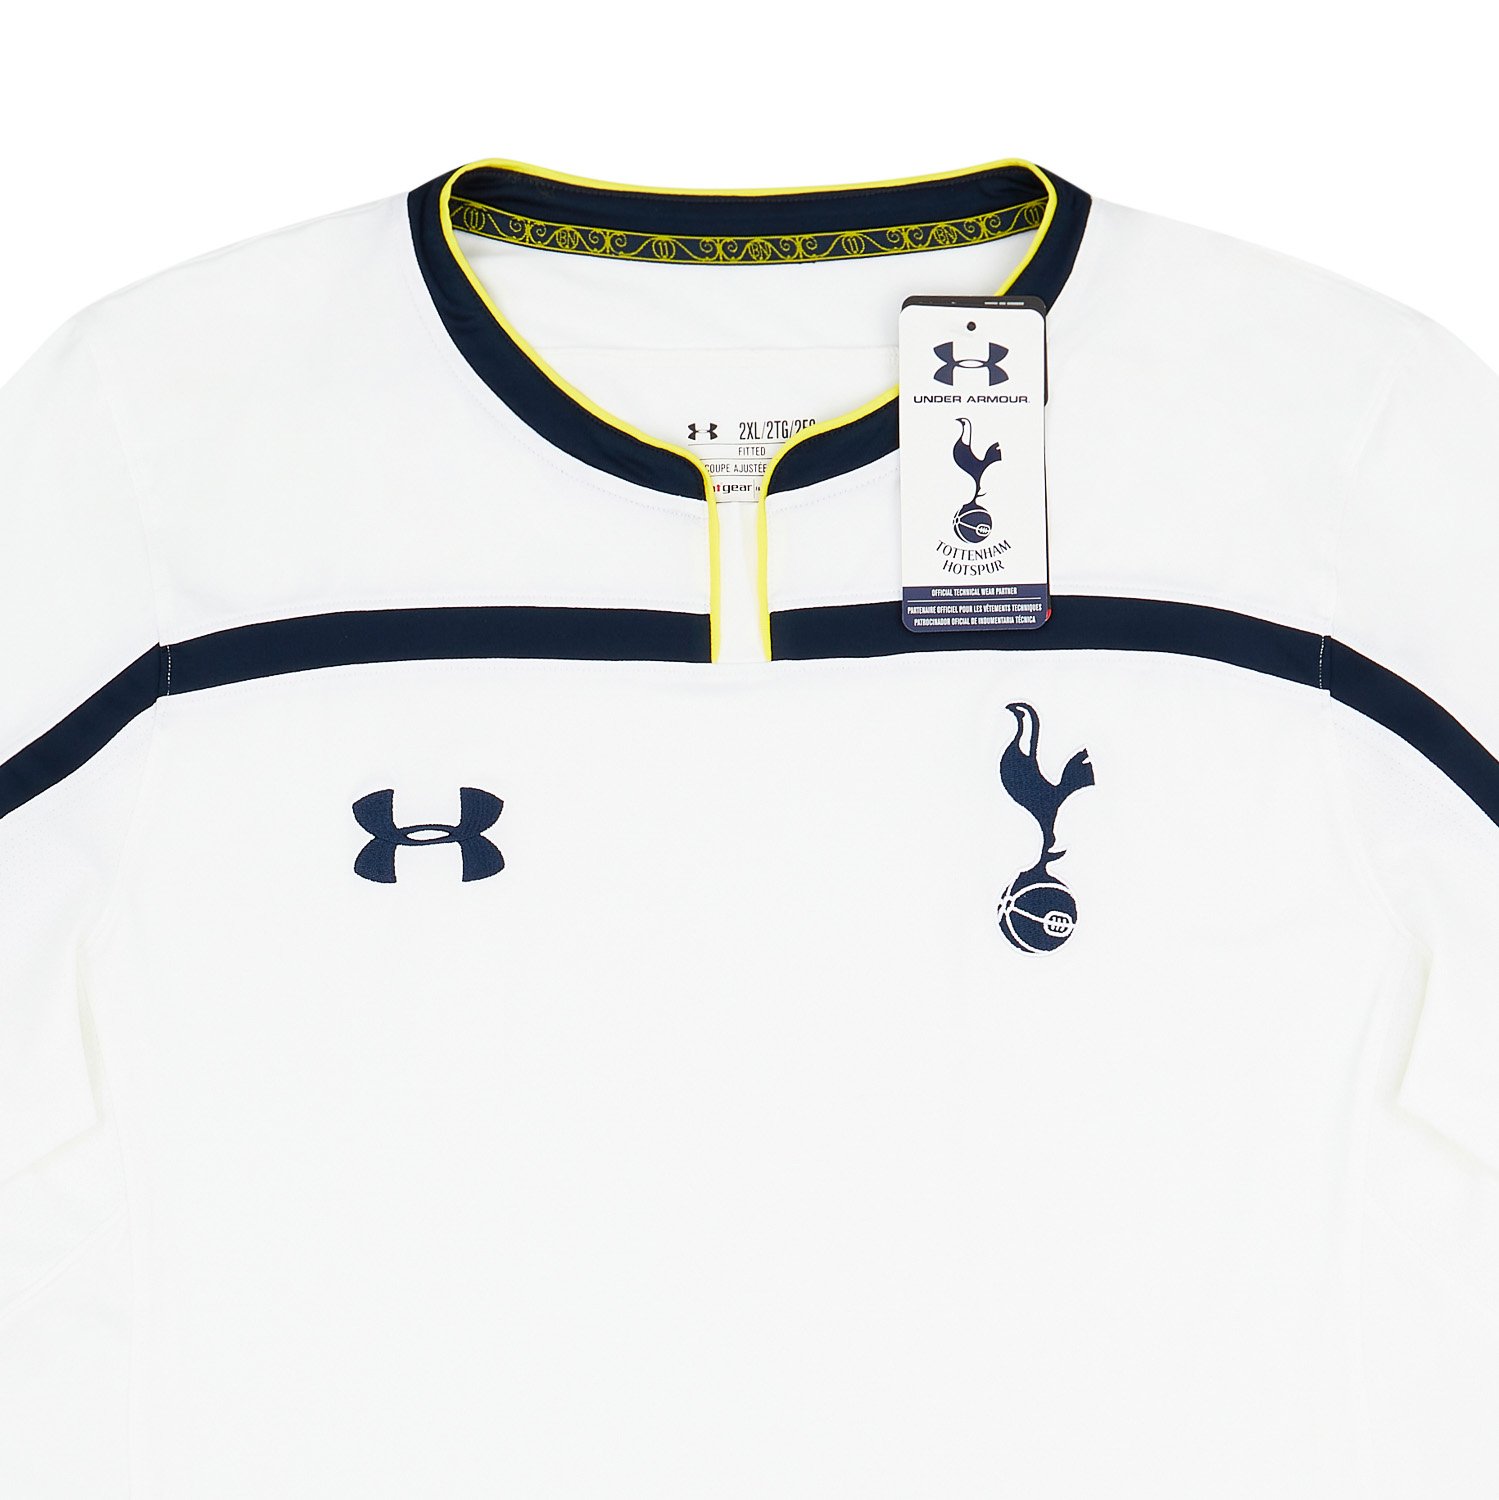 Tottenham Hotspur 2014/15 Under Armour Third Kit - FOOTBALL FASHION